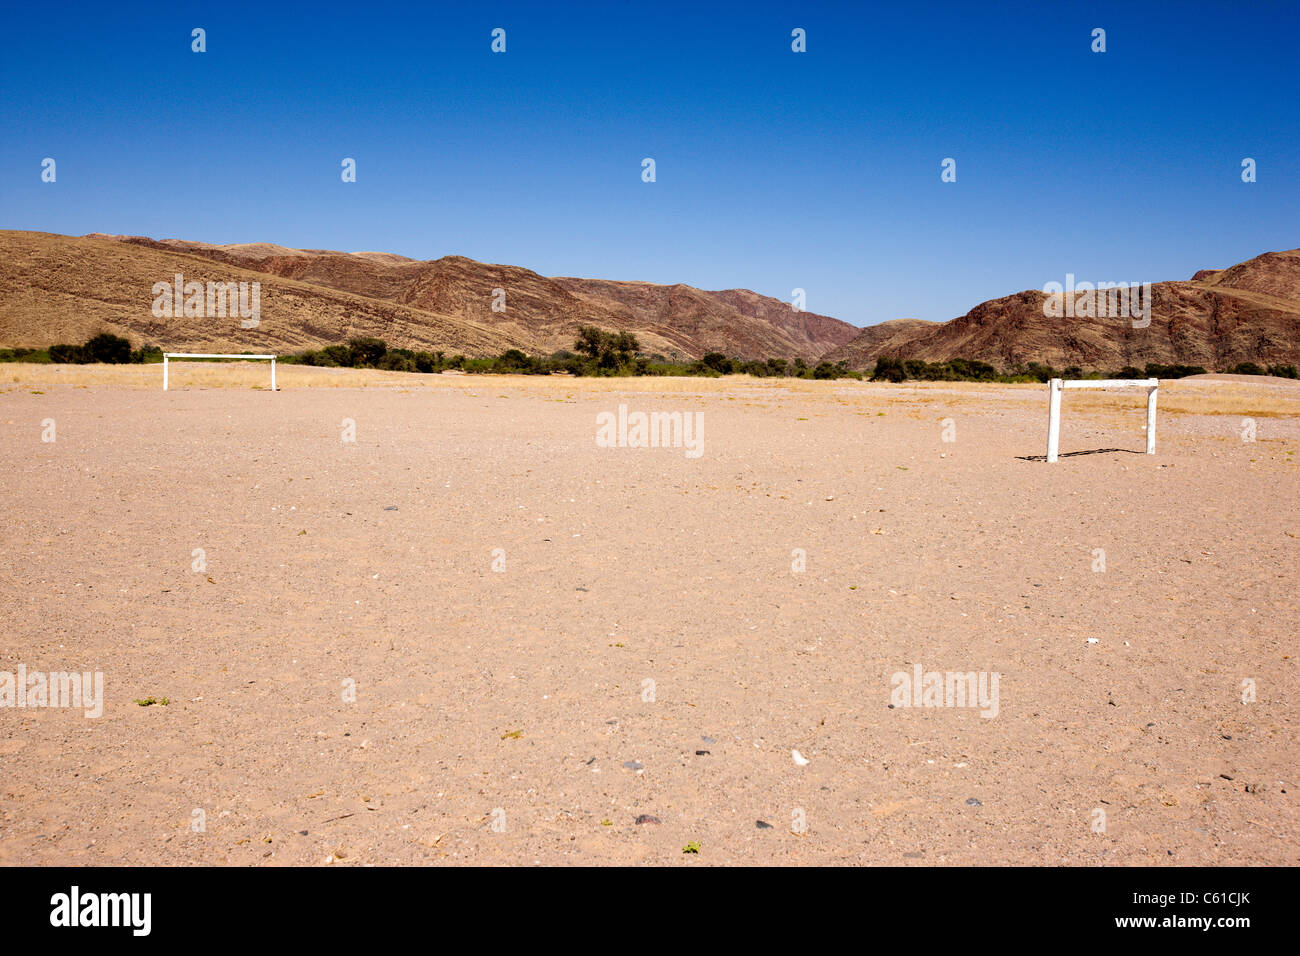 The sand football pitch belonging to Purros school. Purros, Northern Kaokoland, Kaokoveld, Namibia. Stock Photo